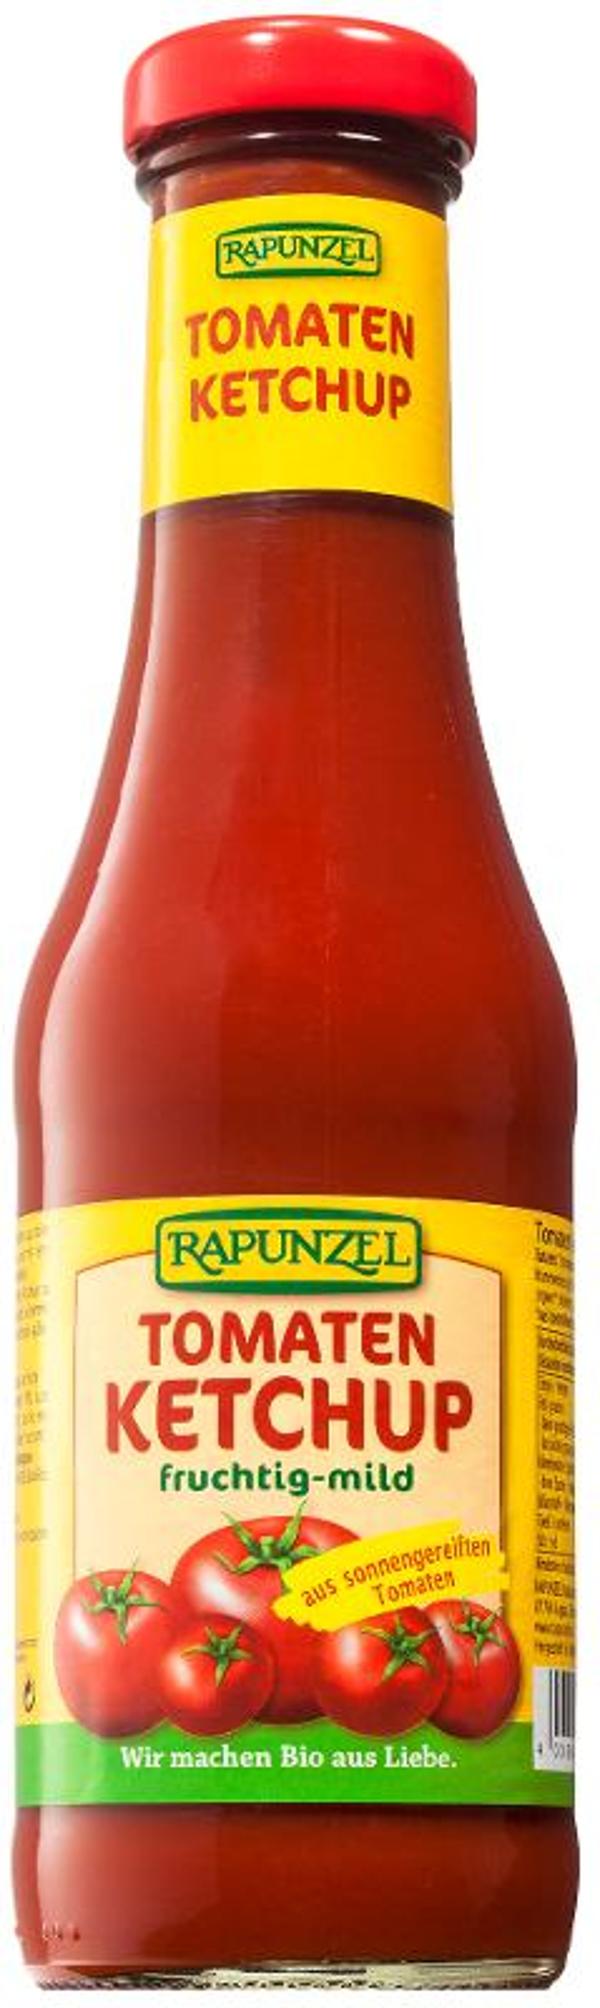 Produktfoto zu Ketchup 450 ml